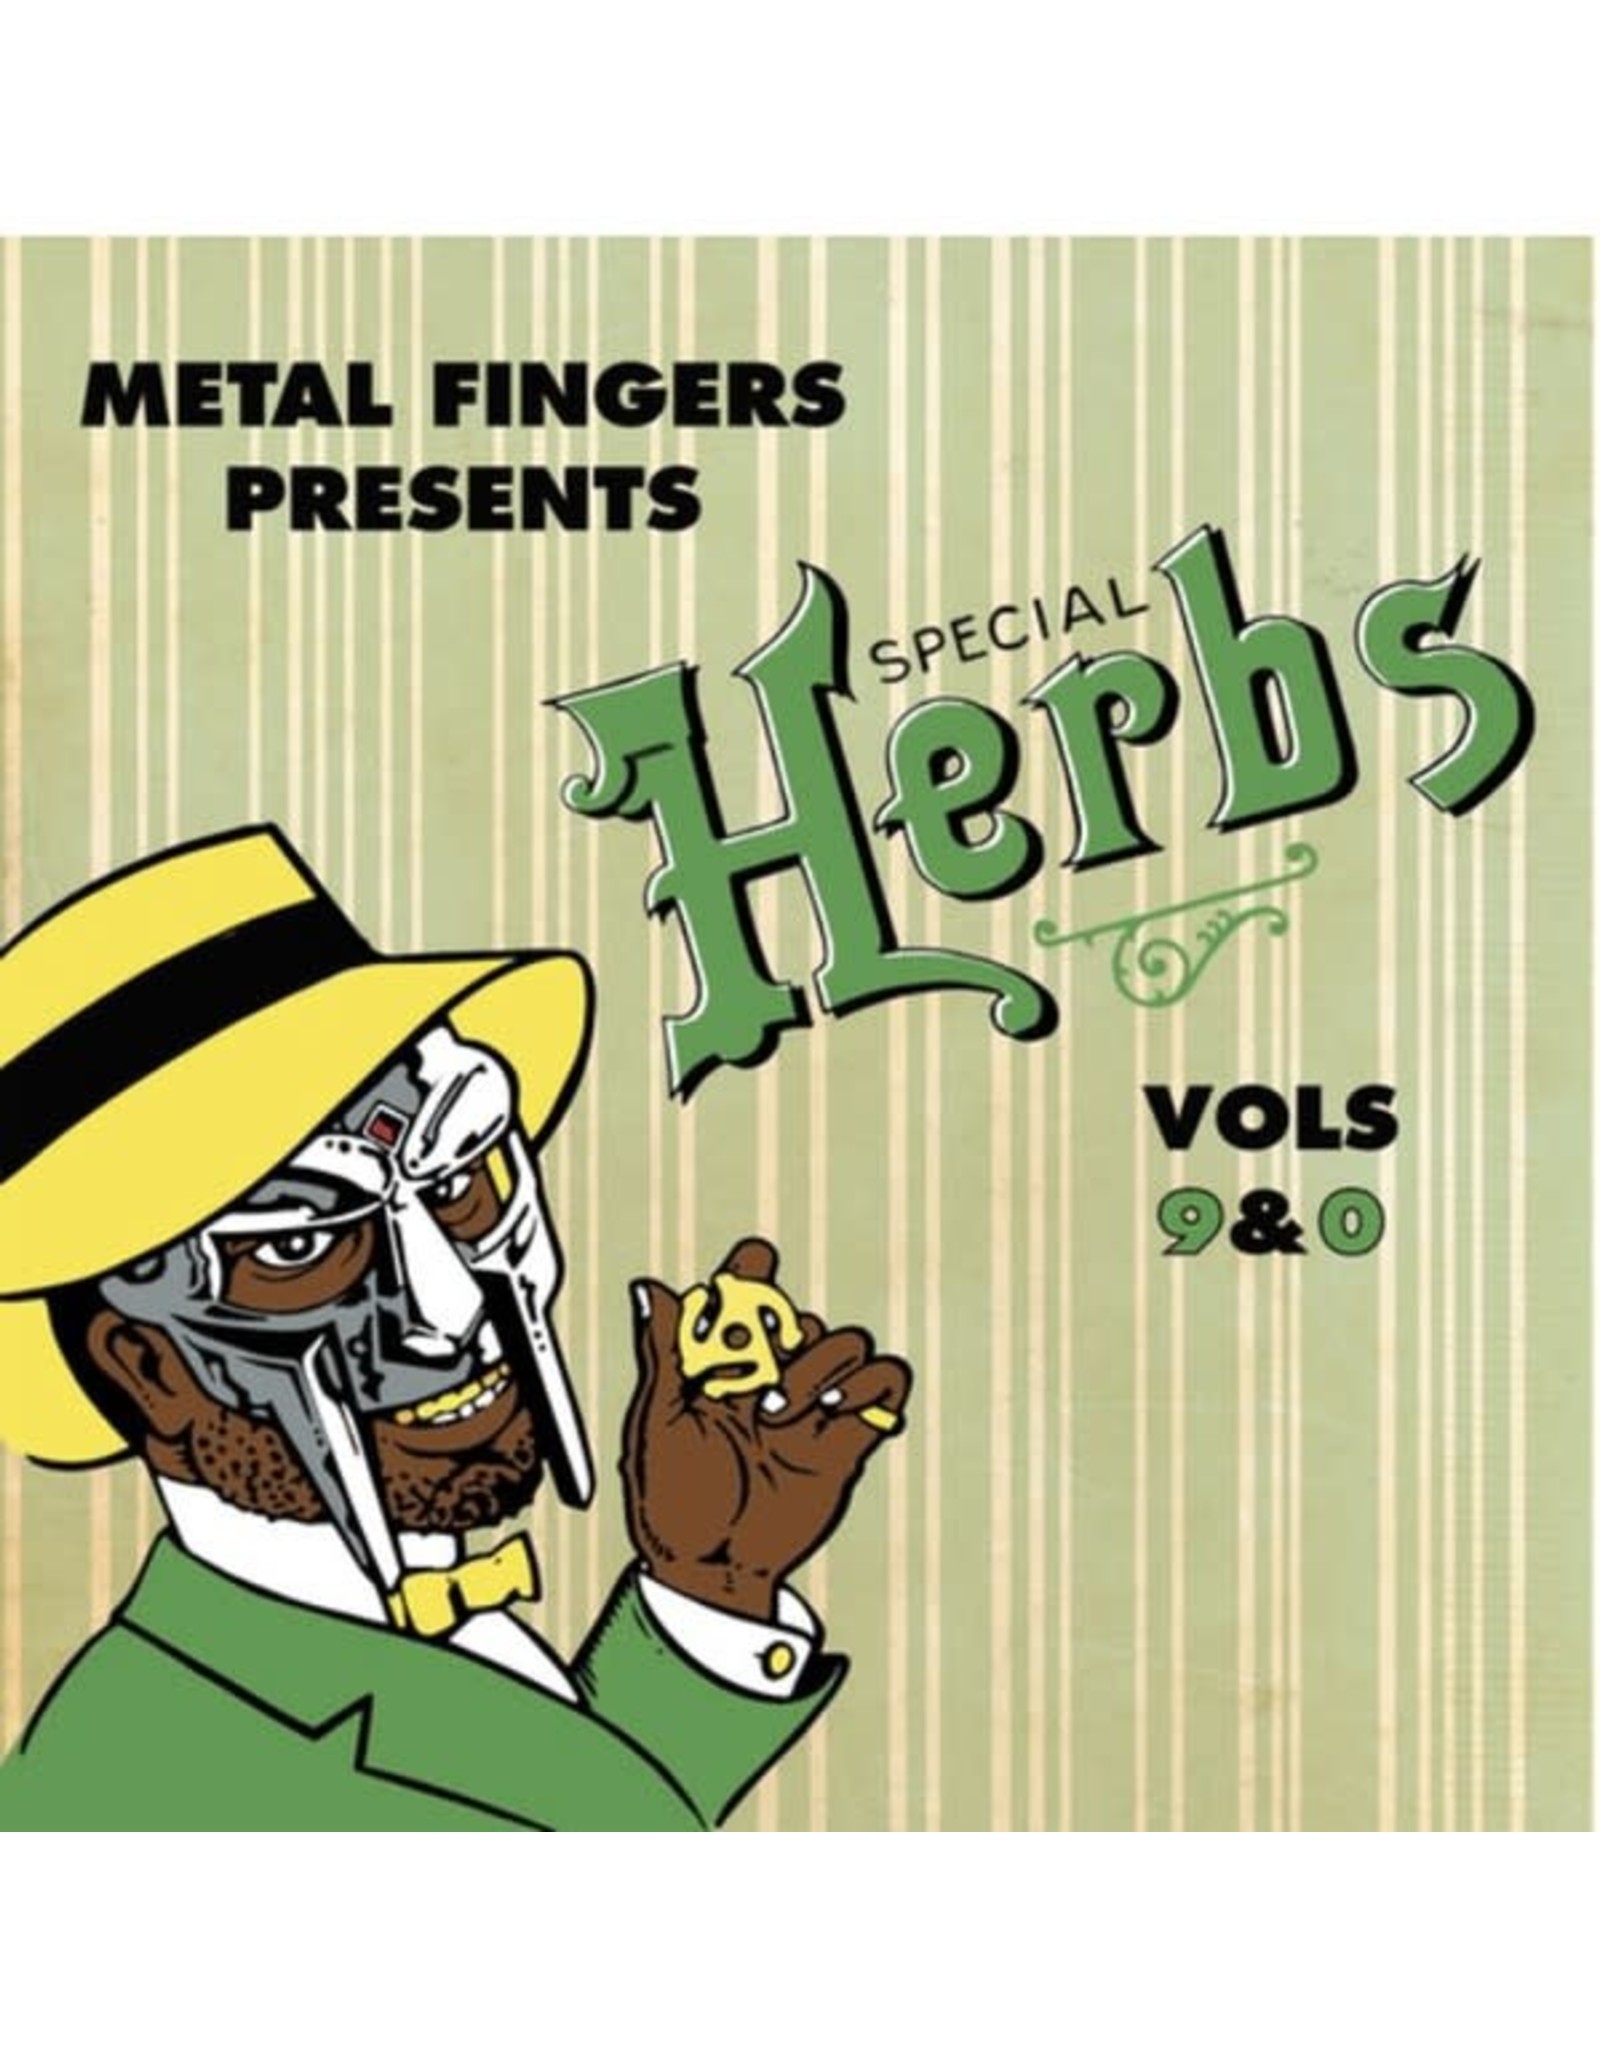 New Vinyl MF DOOM - Special Herbs Vol. 9 & 0 2LP